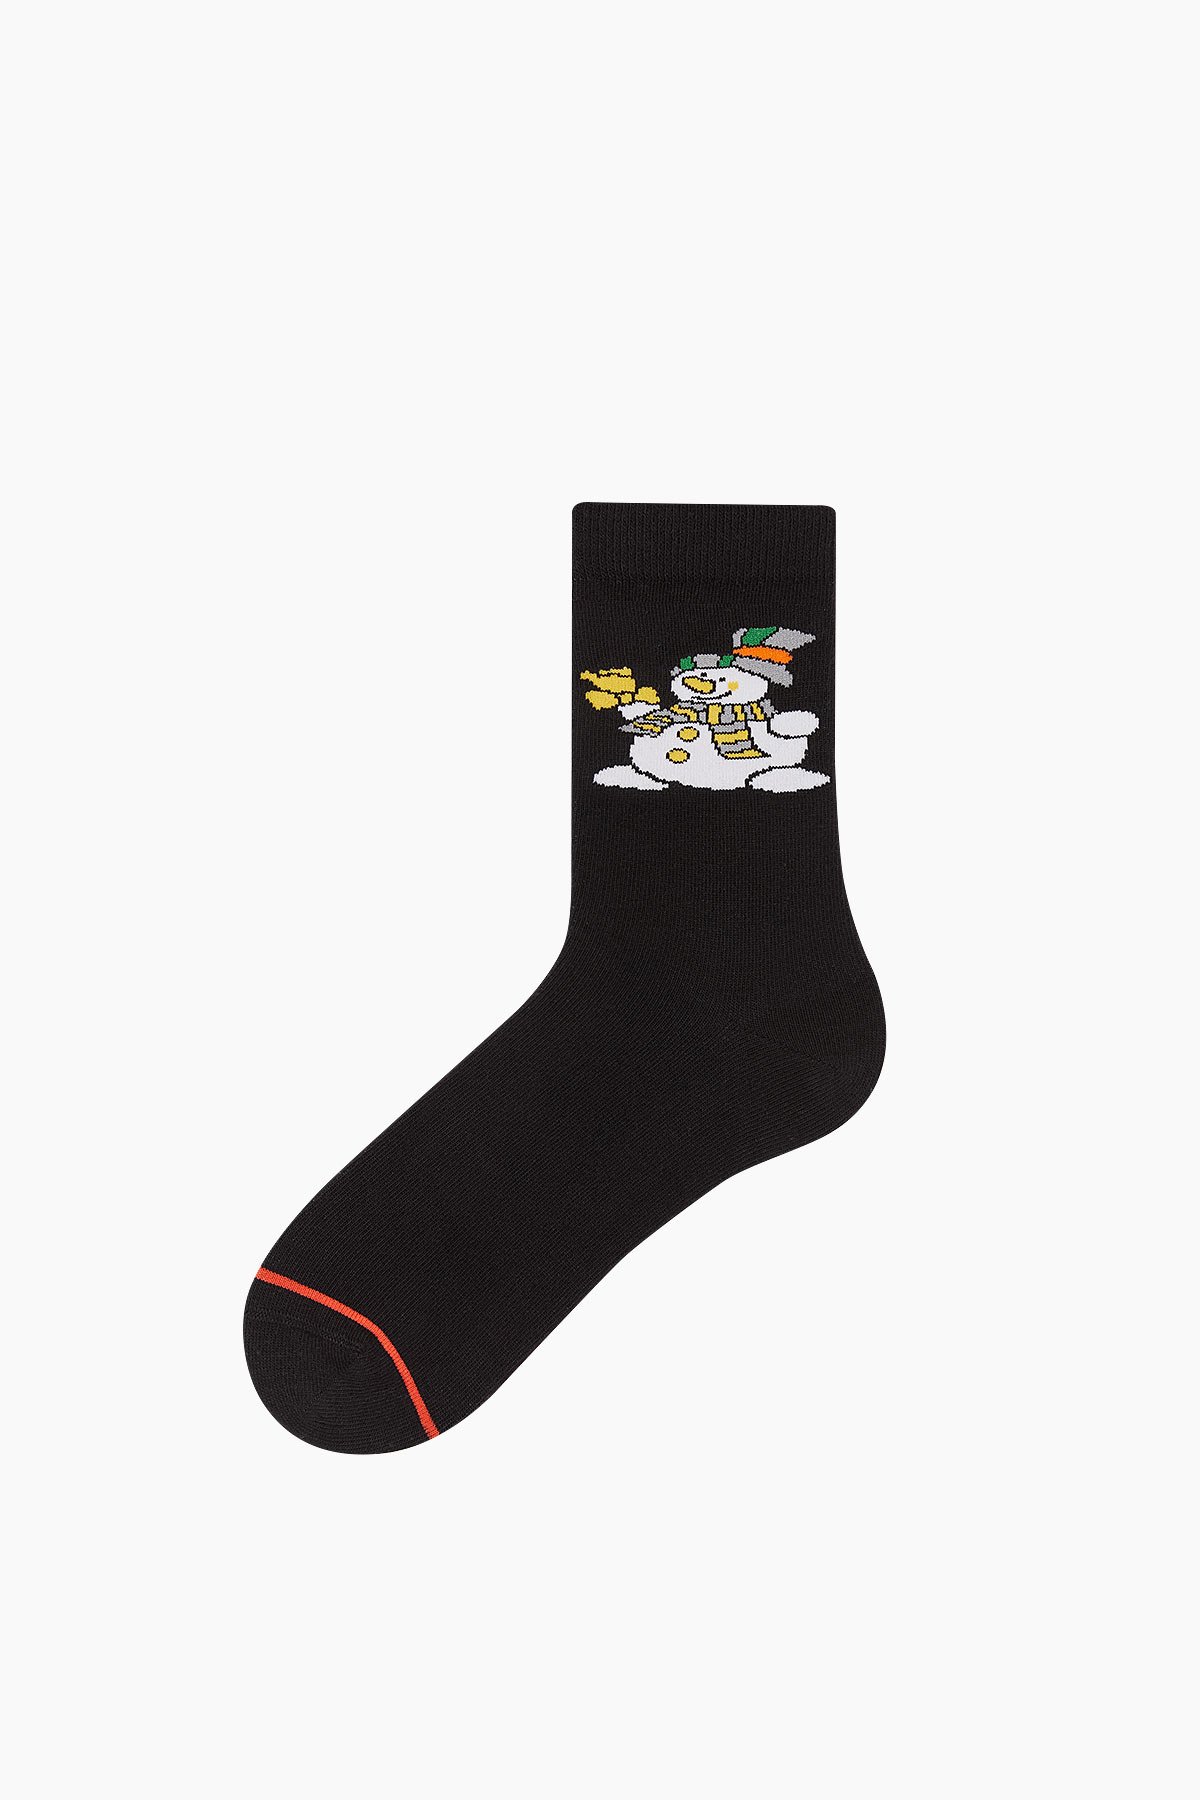 Bross Ho Ho Printed Unisex Christmas Socks